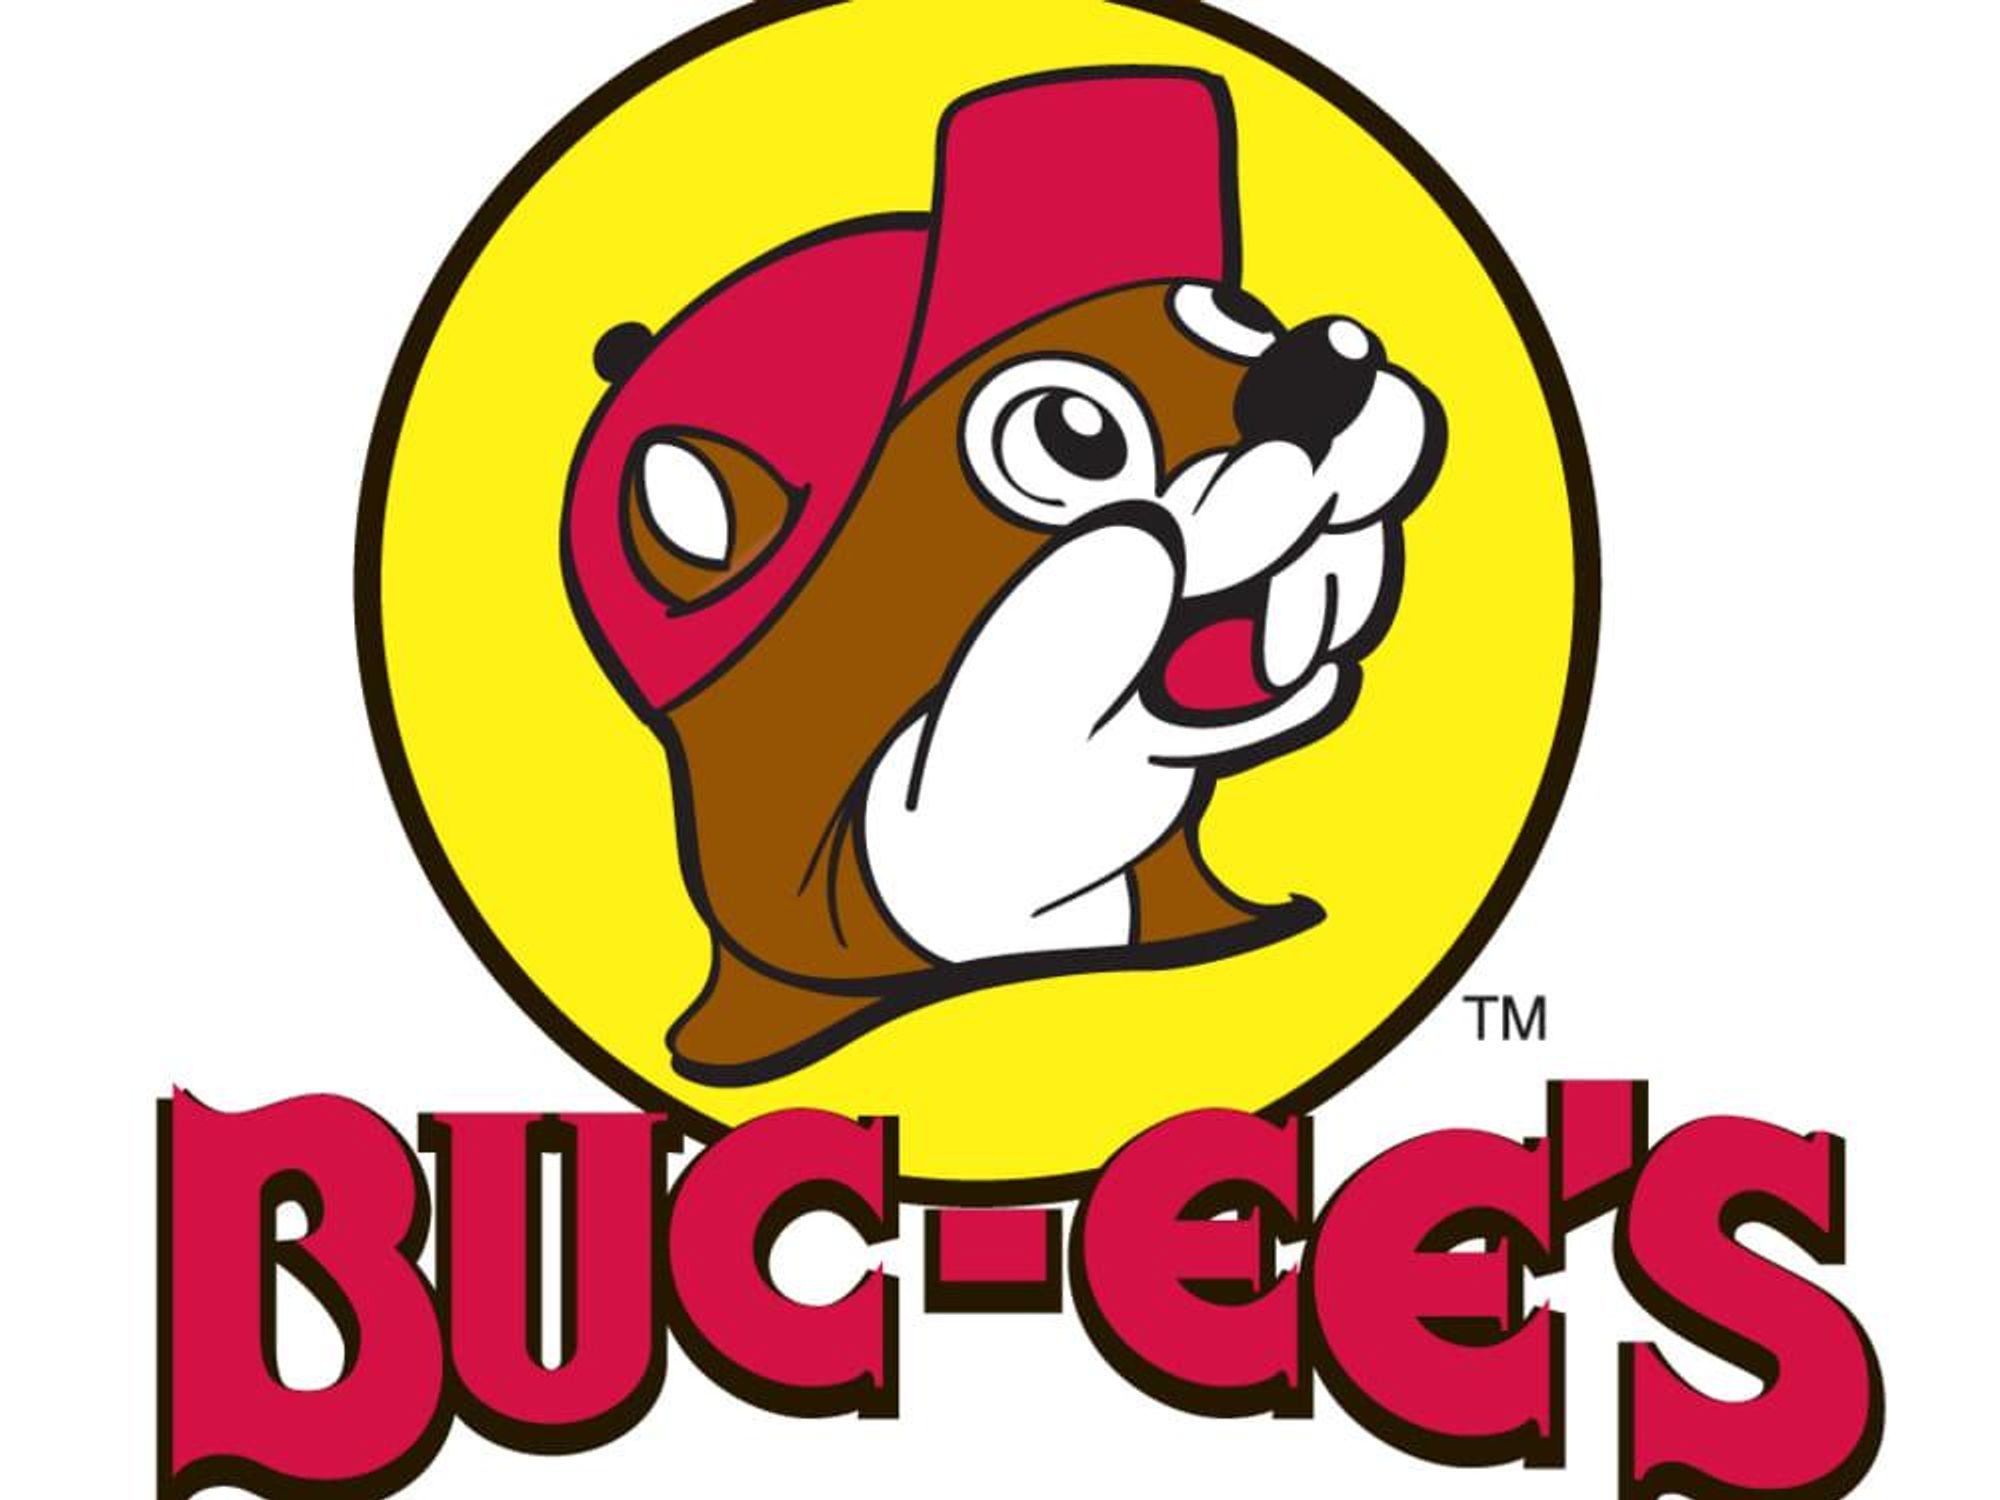 Houston, Buc-ees Bucees logo, August 2017